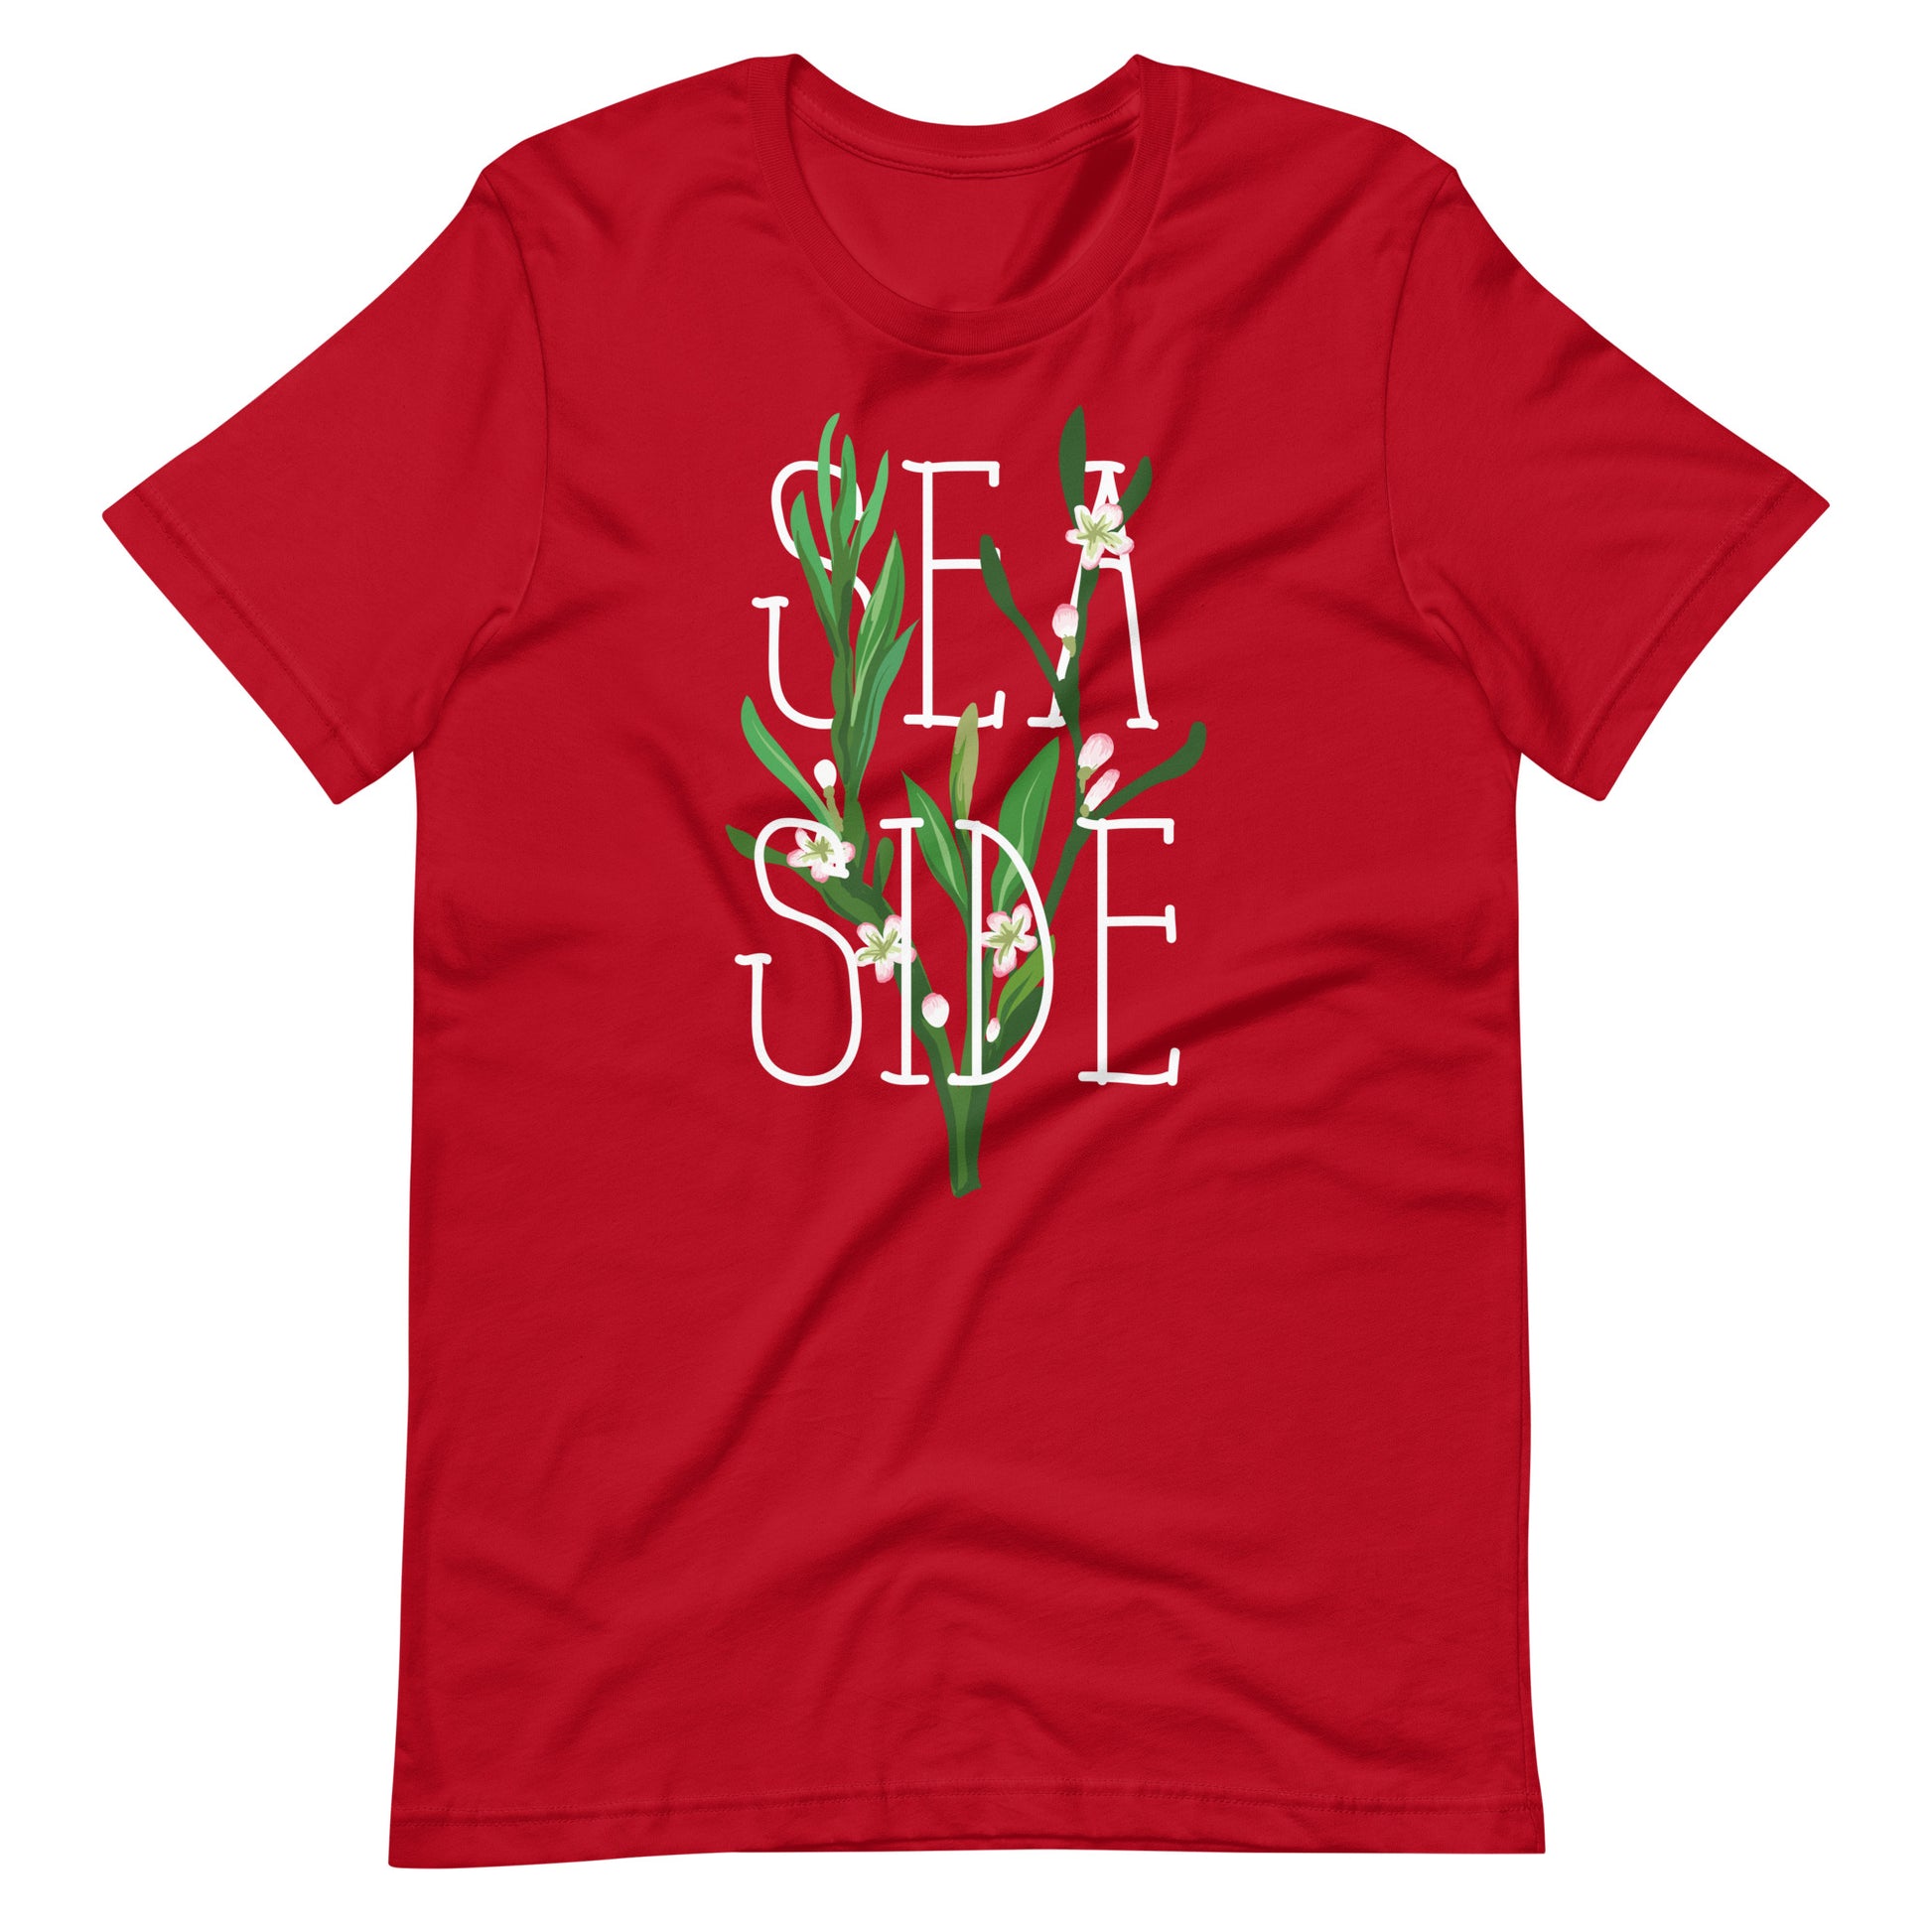 Printagon - Sea Side - Unisex T-shirt - Red / XS